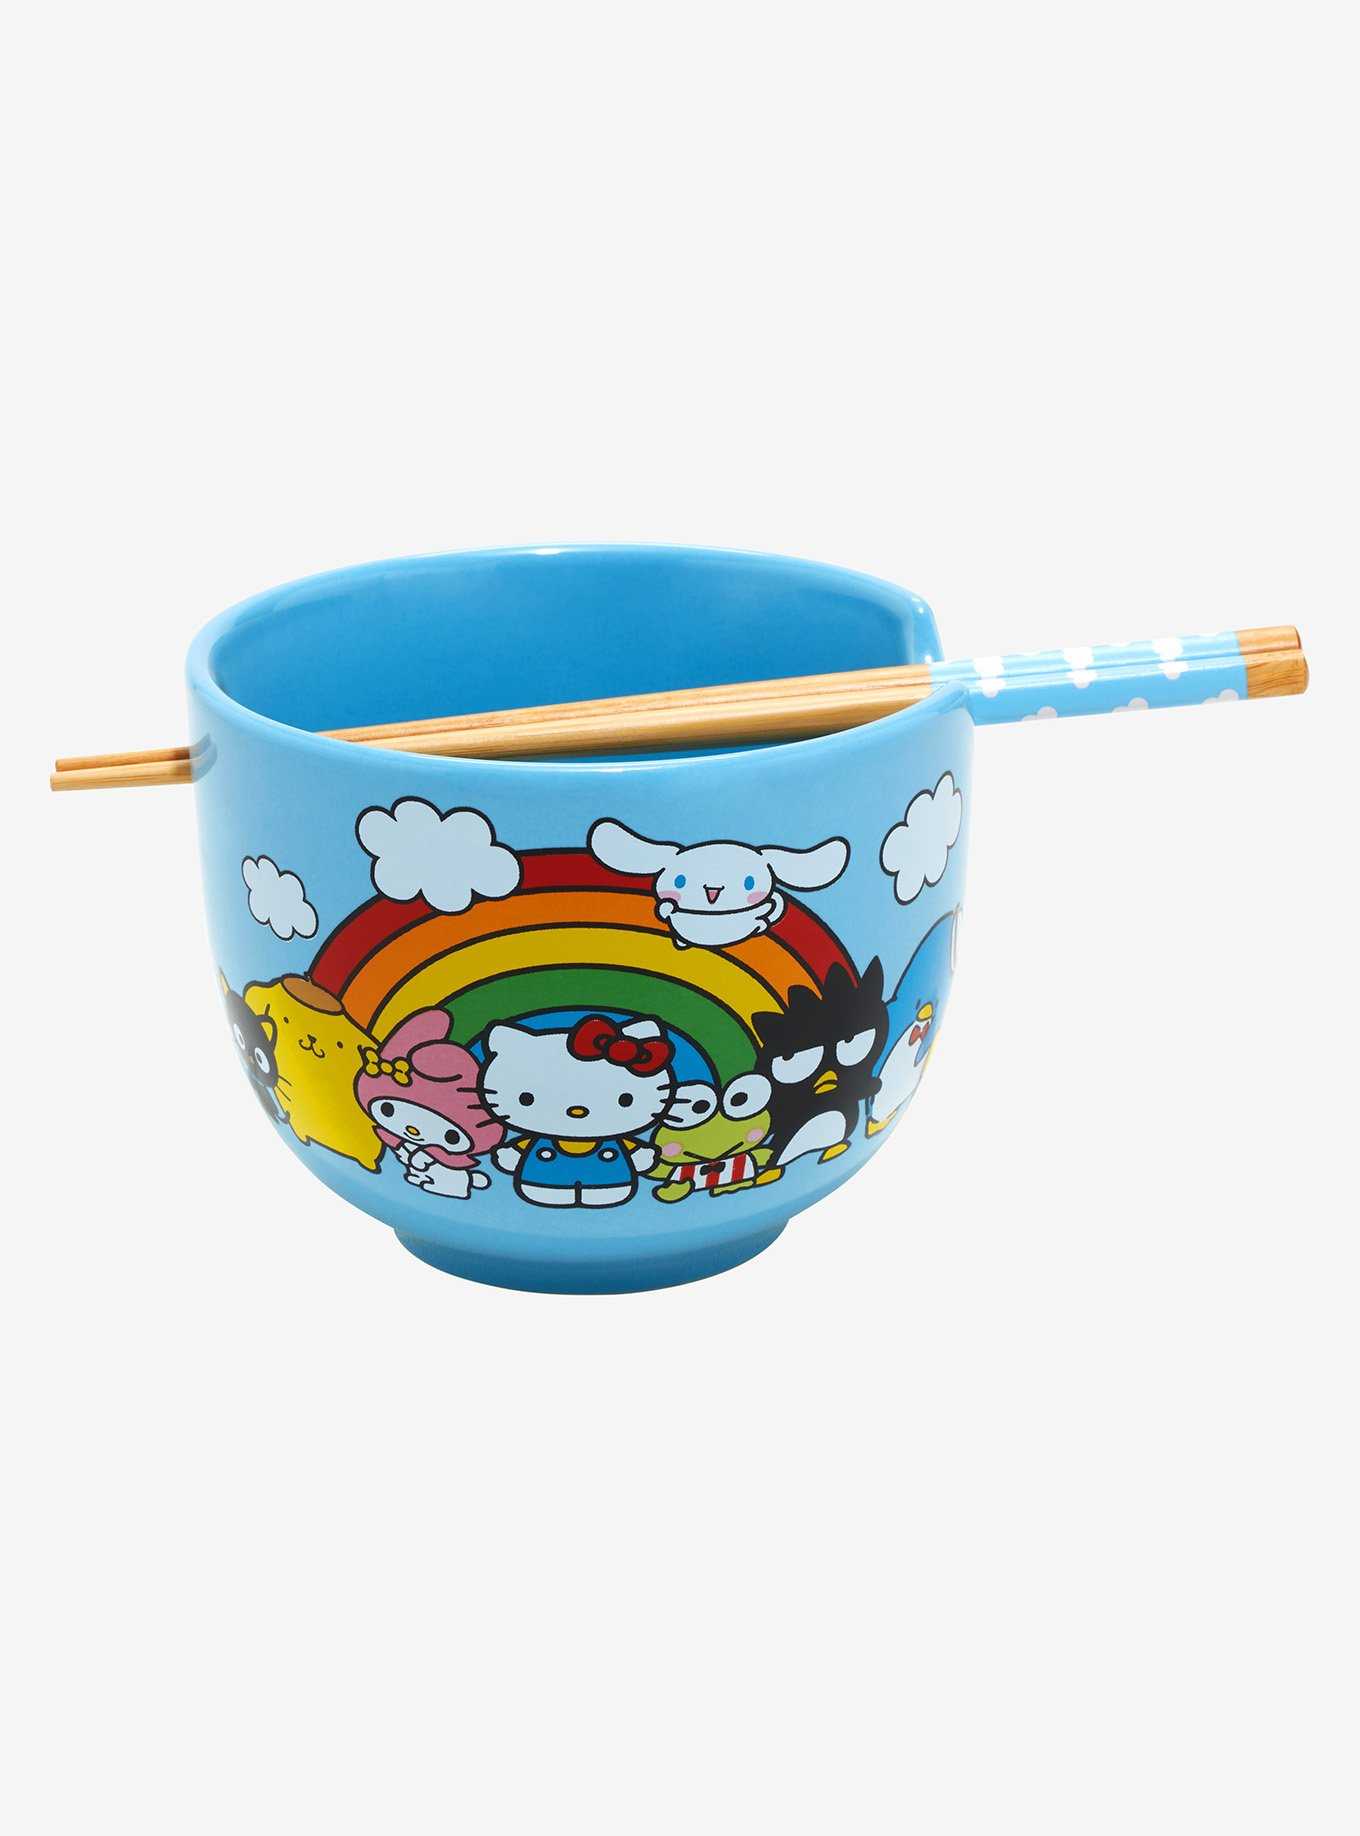 Sanrio Hello Kitty and Friends Rainbow Ramen Bowl with